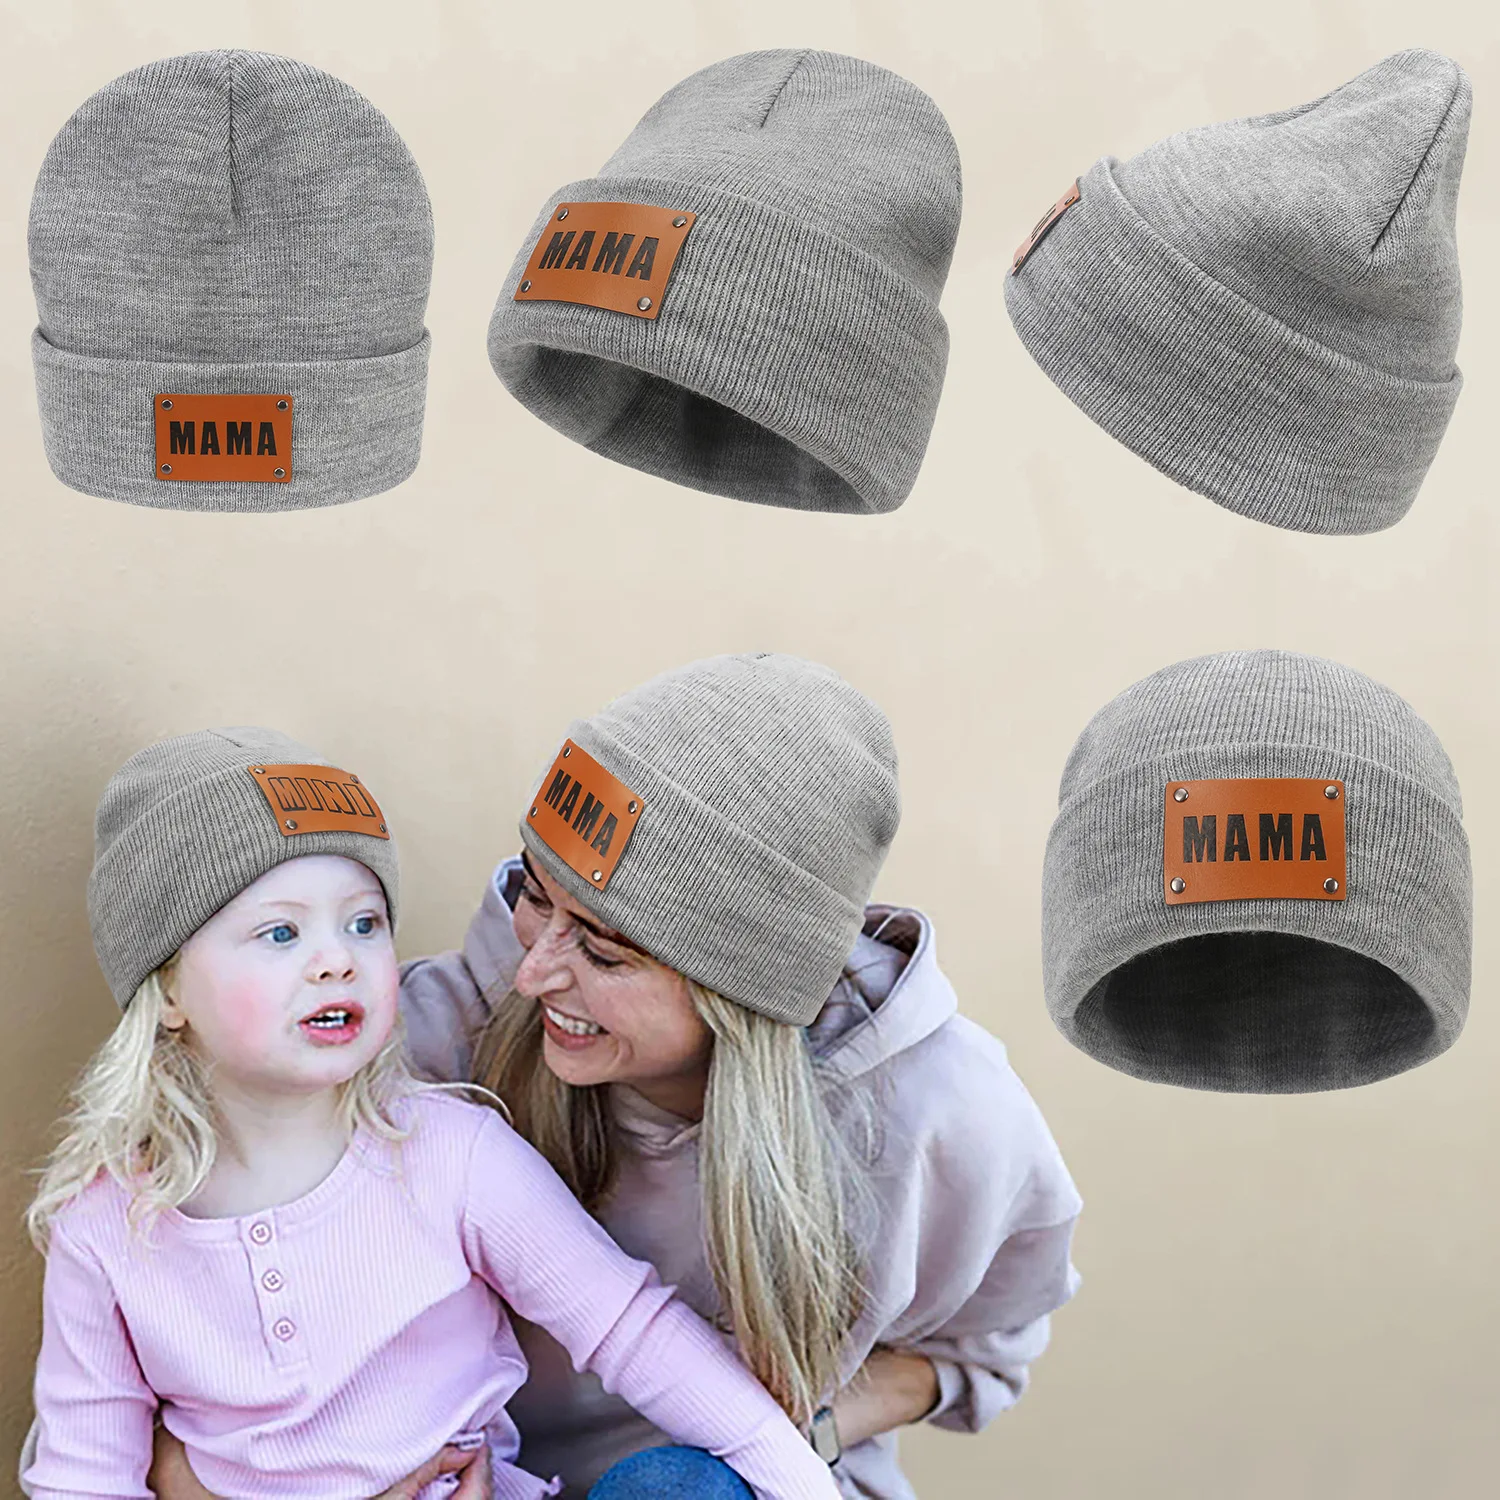 

Детская шапка для мамы и младенца с буквами, теплая зимняя шапка для мамы и ребенка, вязаная шапочка